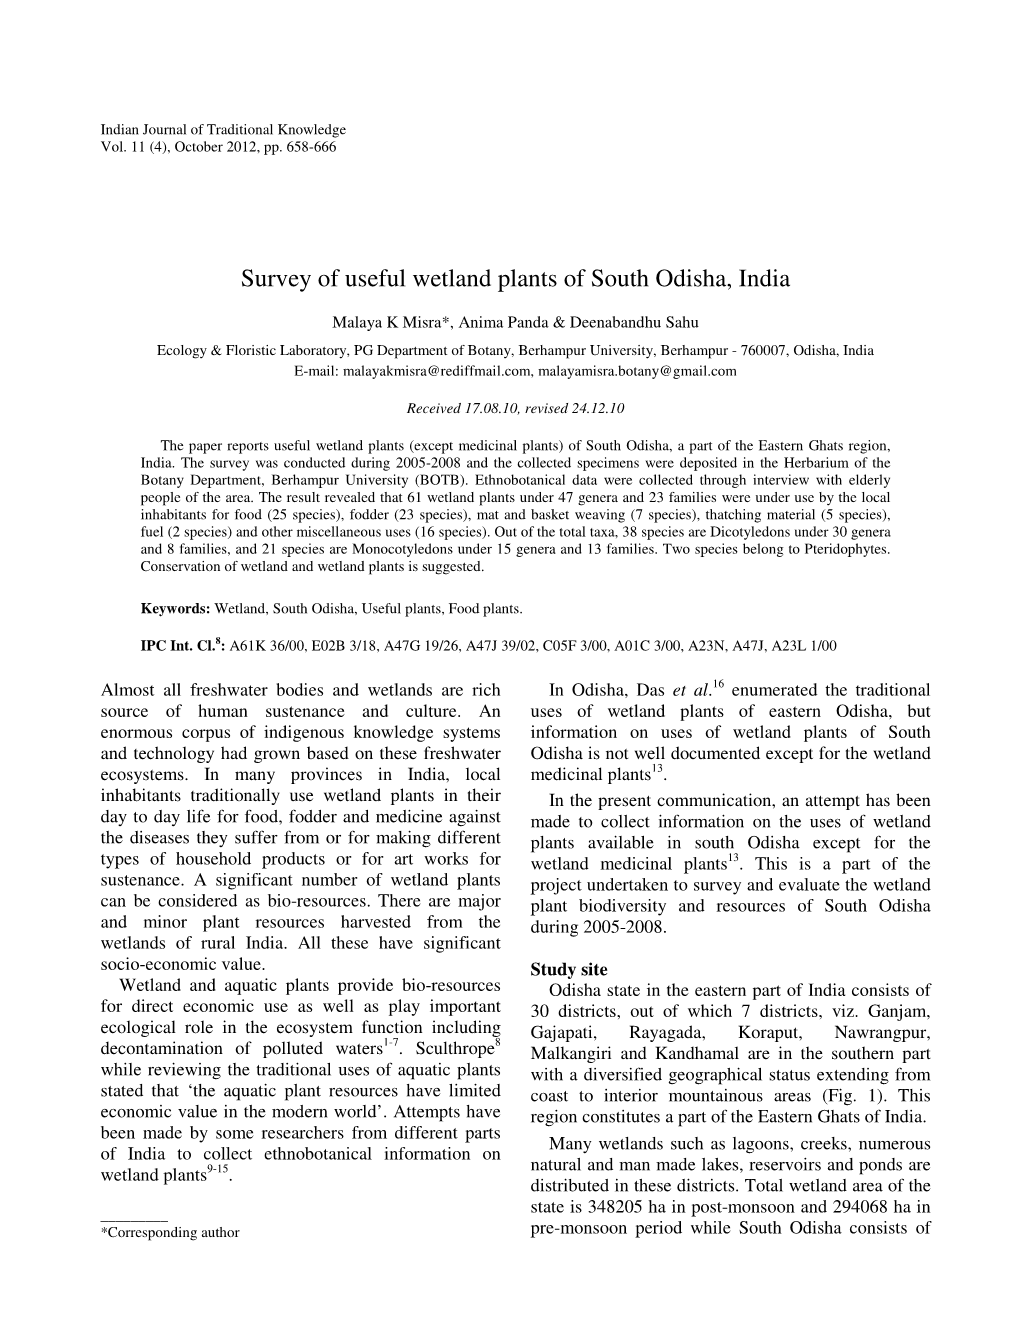 Survey of Useful Wetland Plants of South Odisha, India